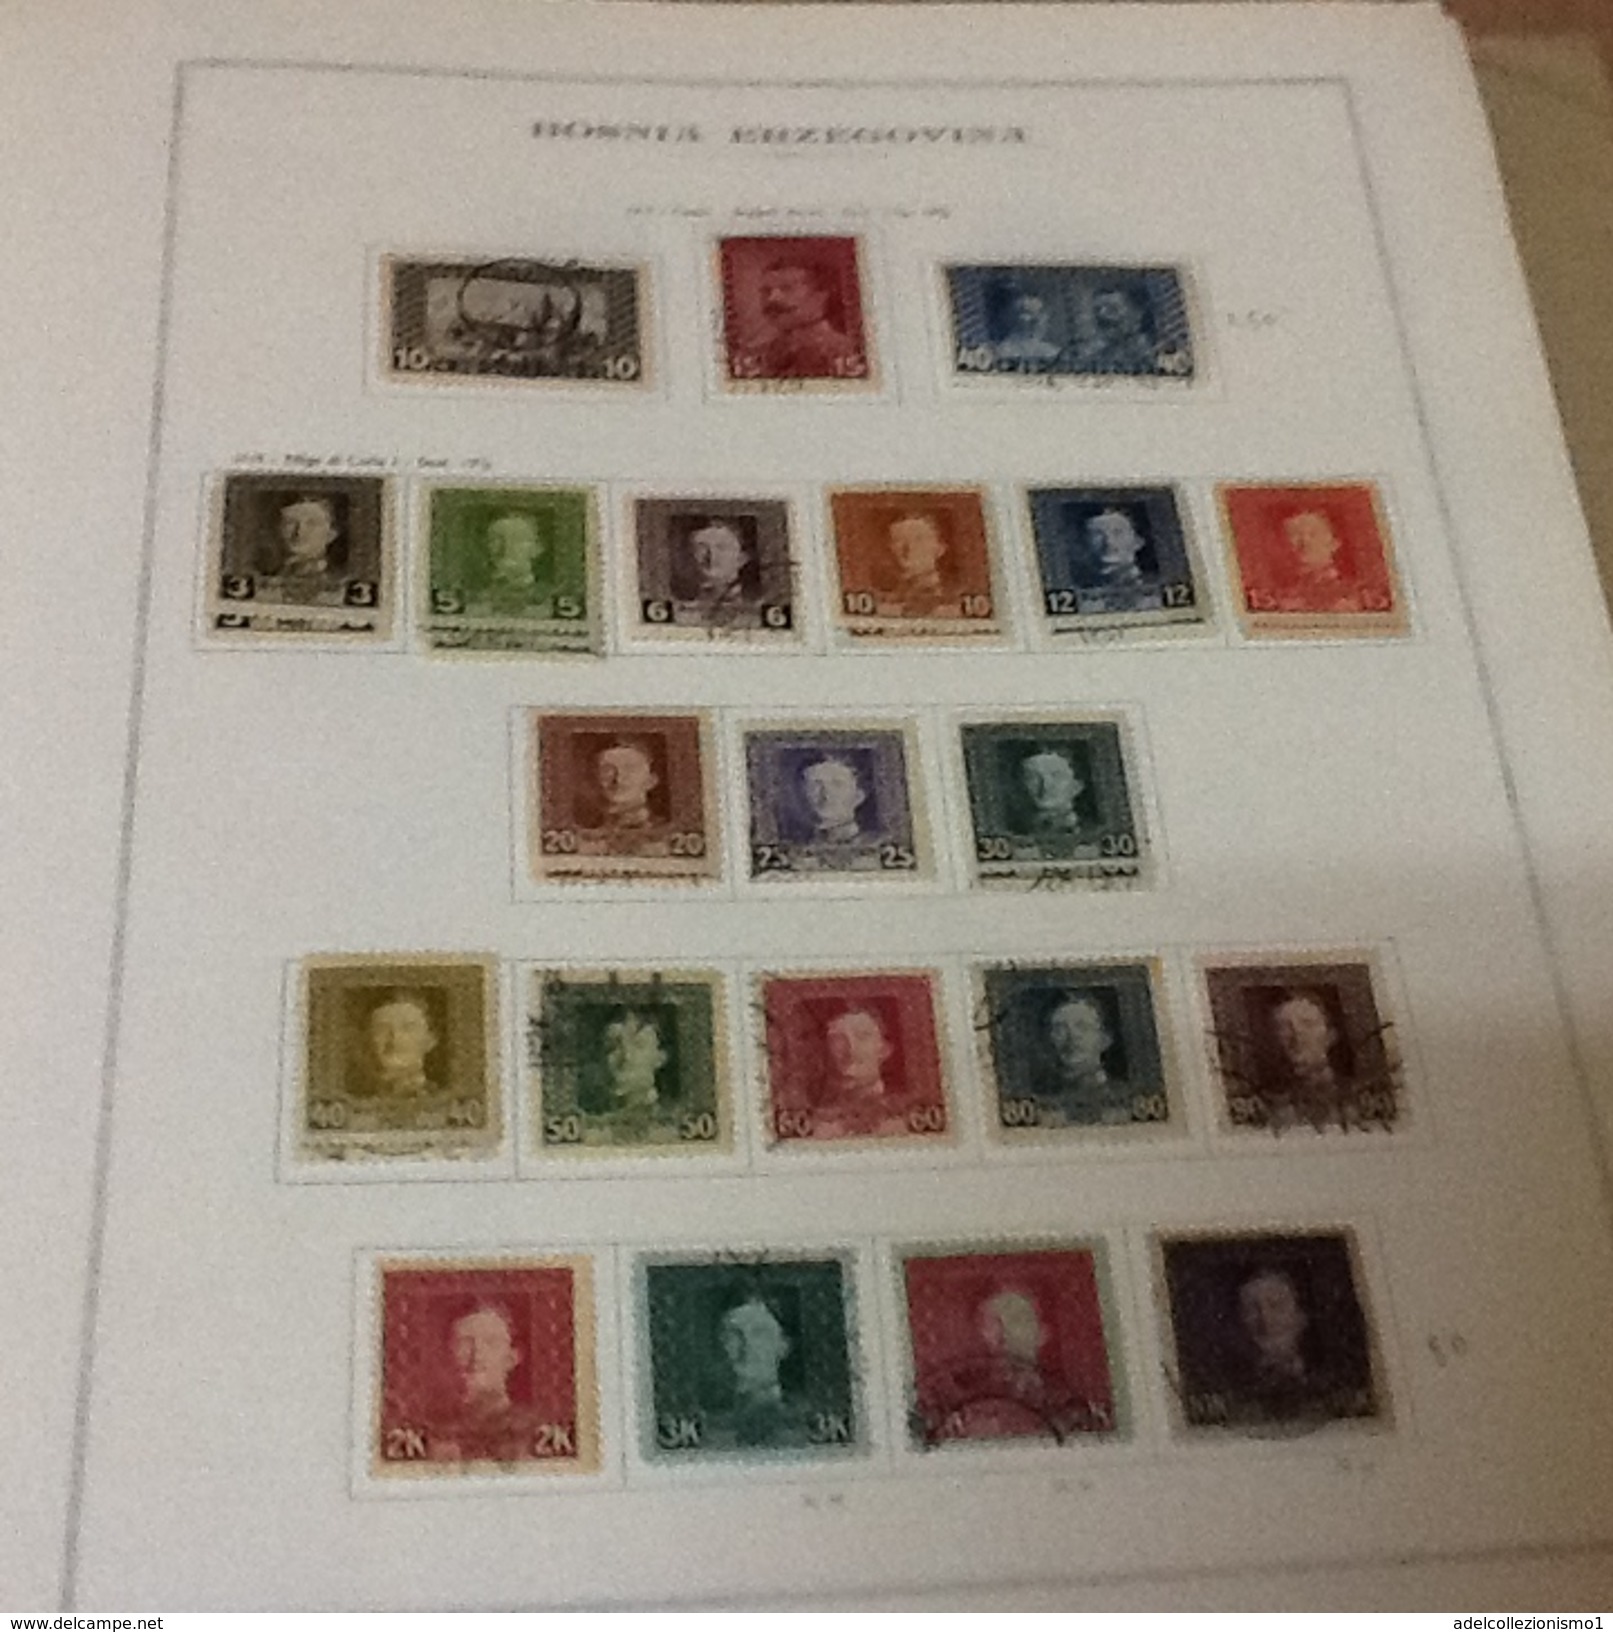 lotto 3) bosnia erzegovina francobolli nuovi e usati su pagine marini dal 1879 al 1918 cat 831 &euro; compresi servizi